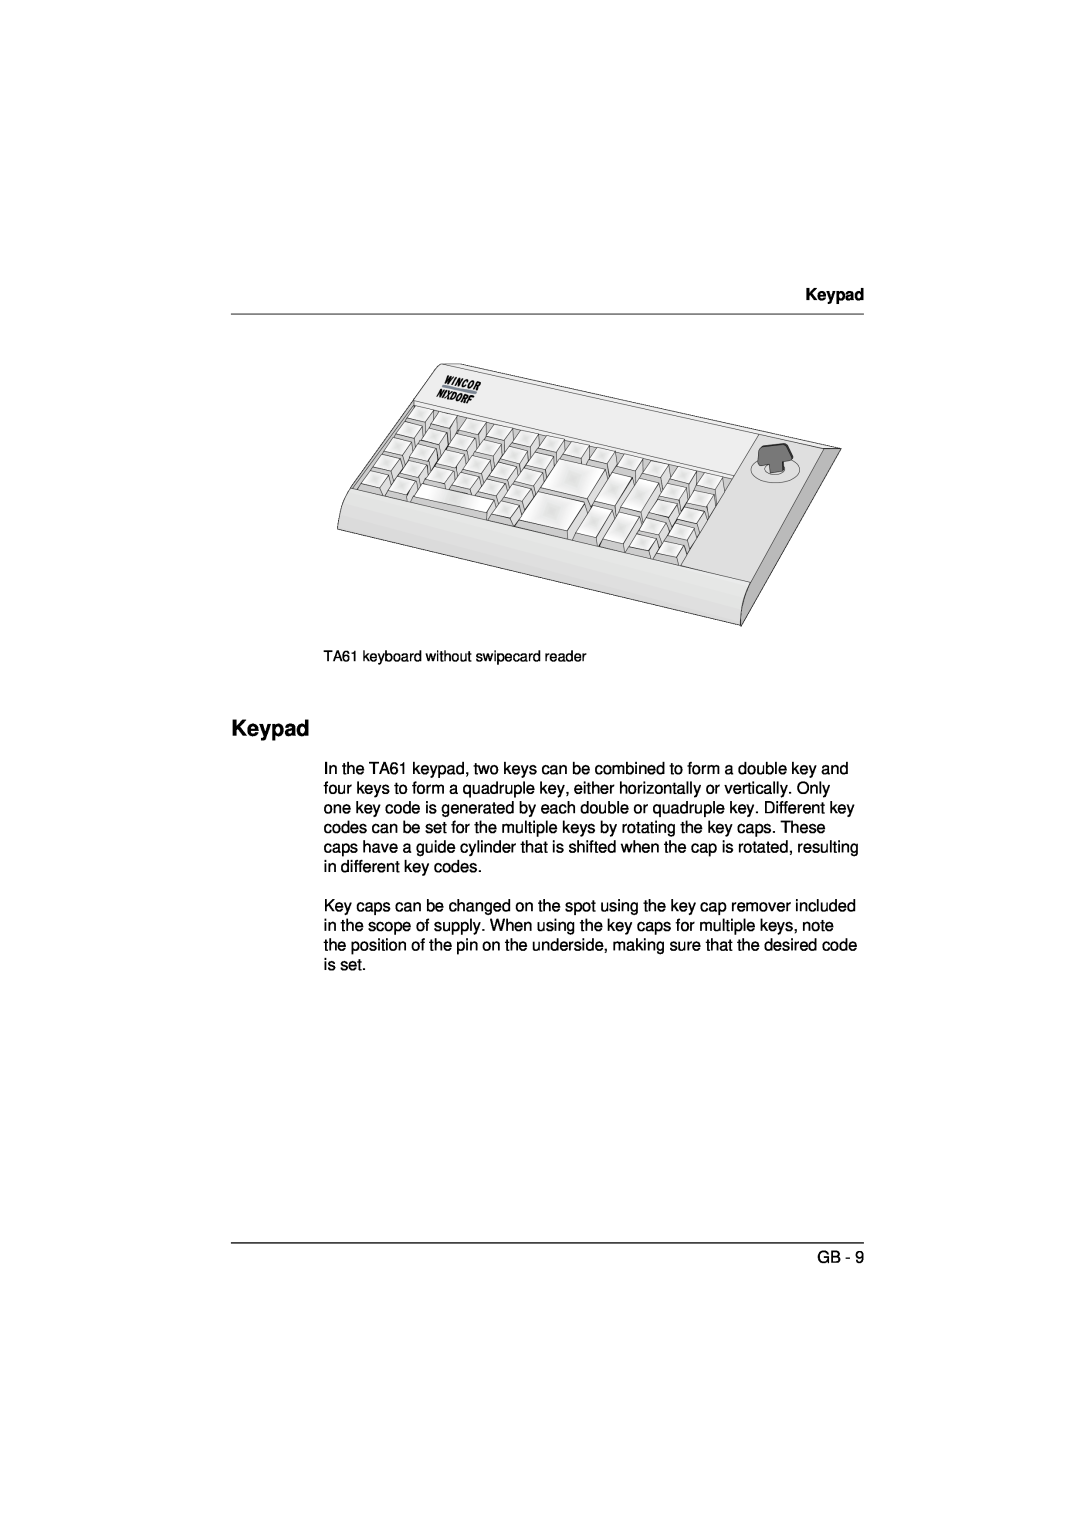 Microsoft TA61 manual Keypad 